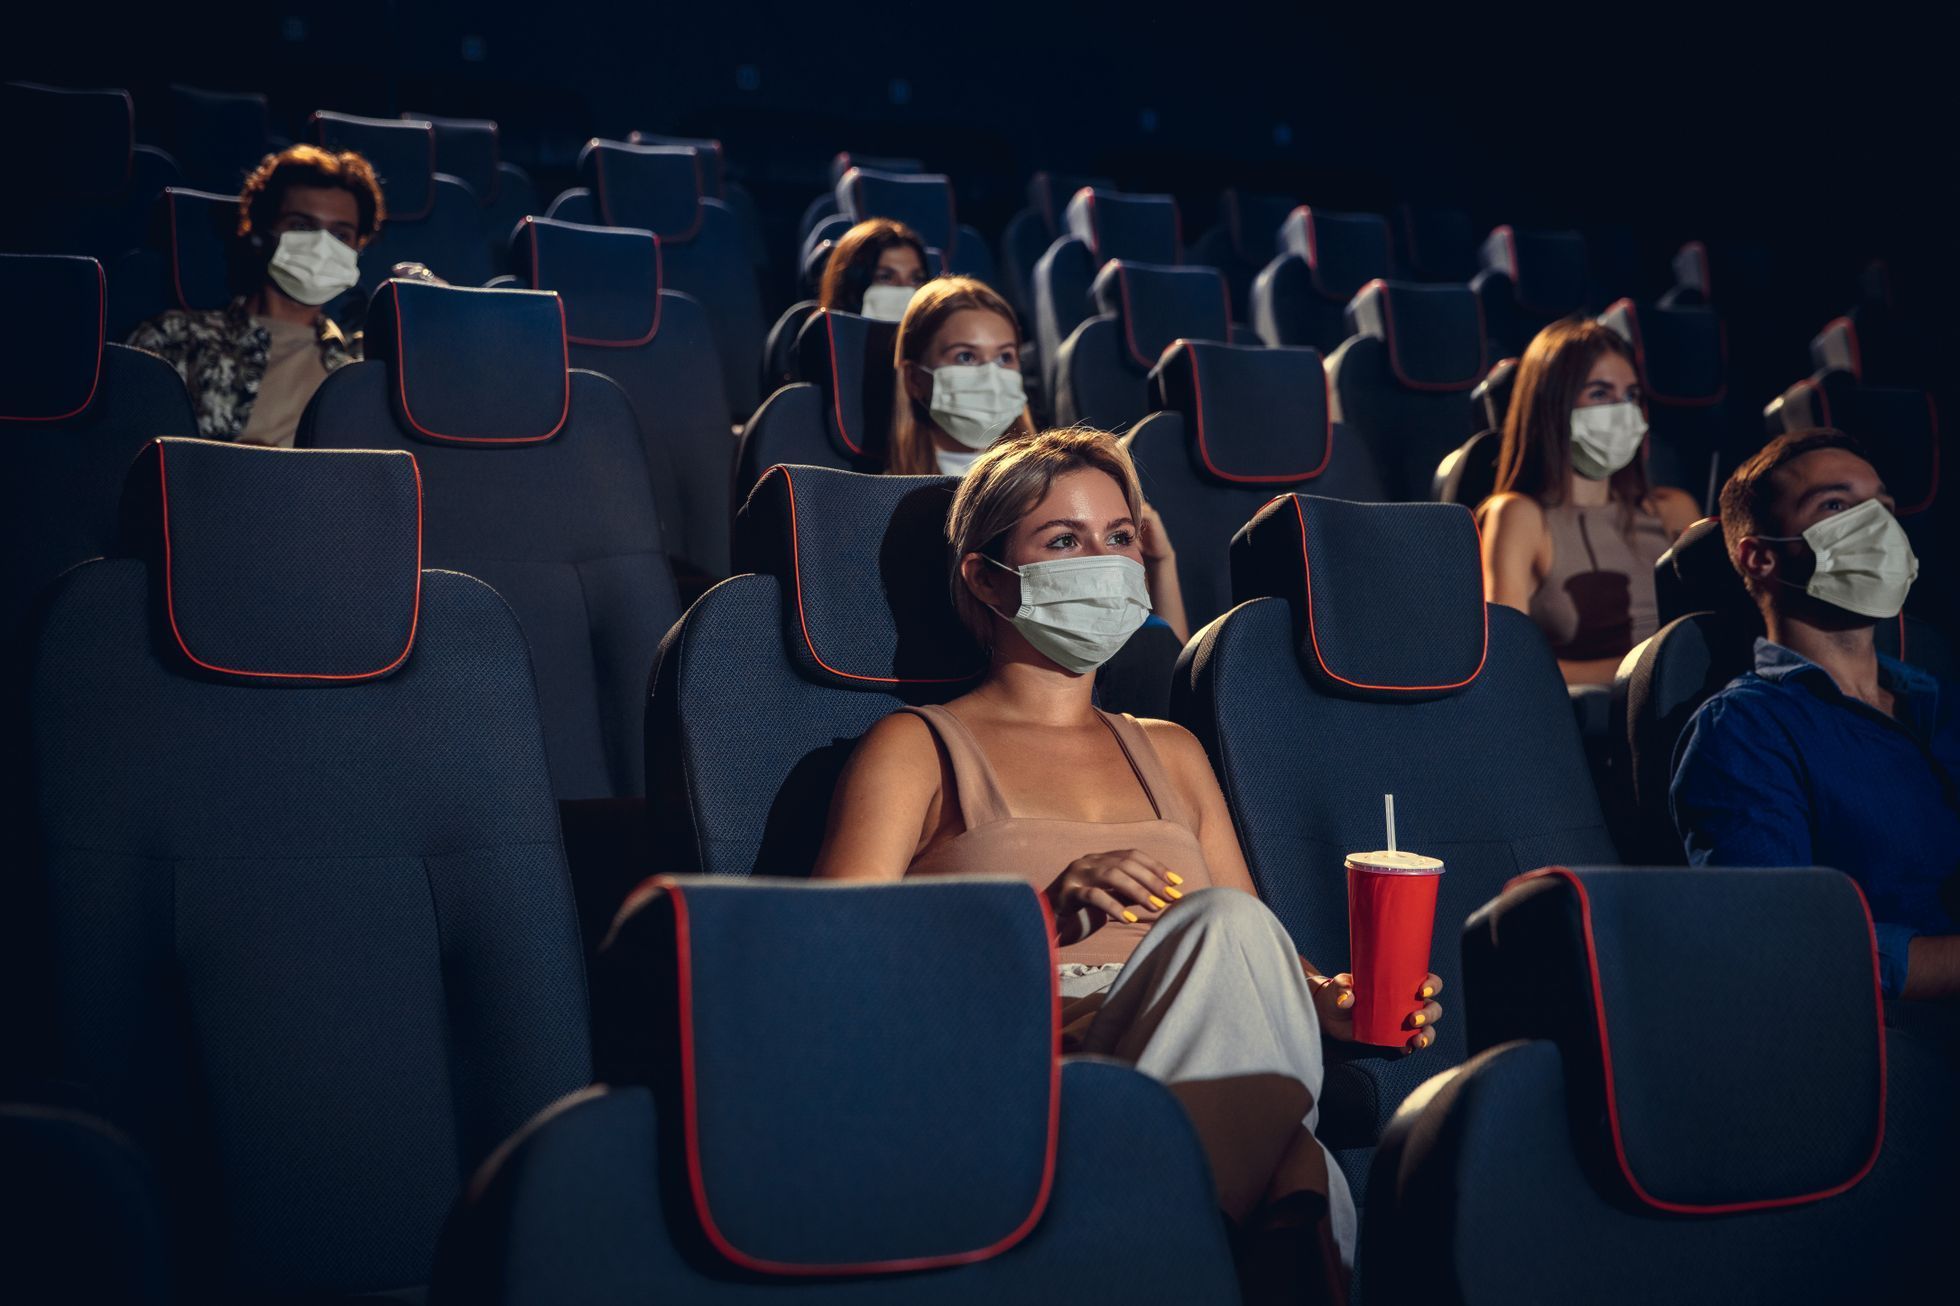 Kino, pandemie